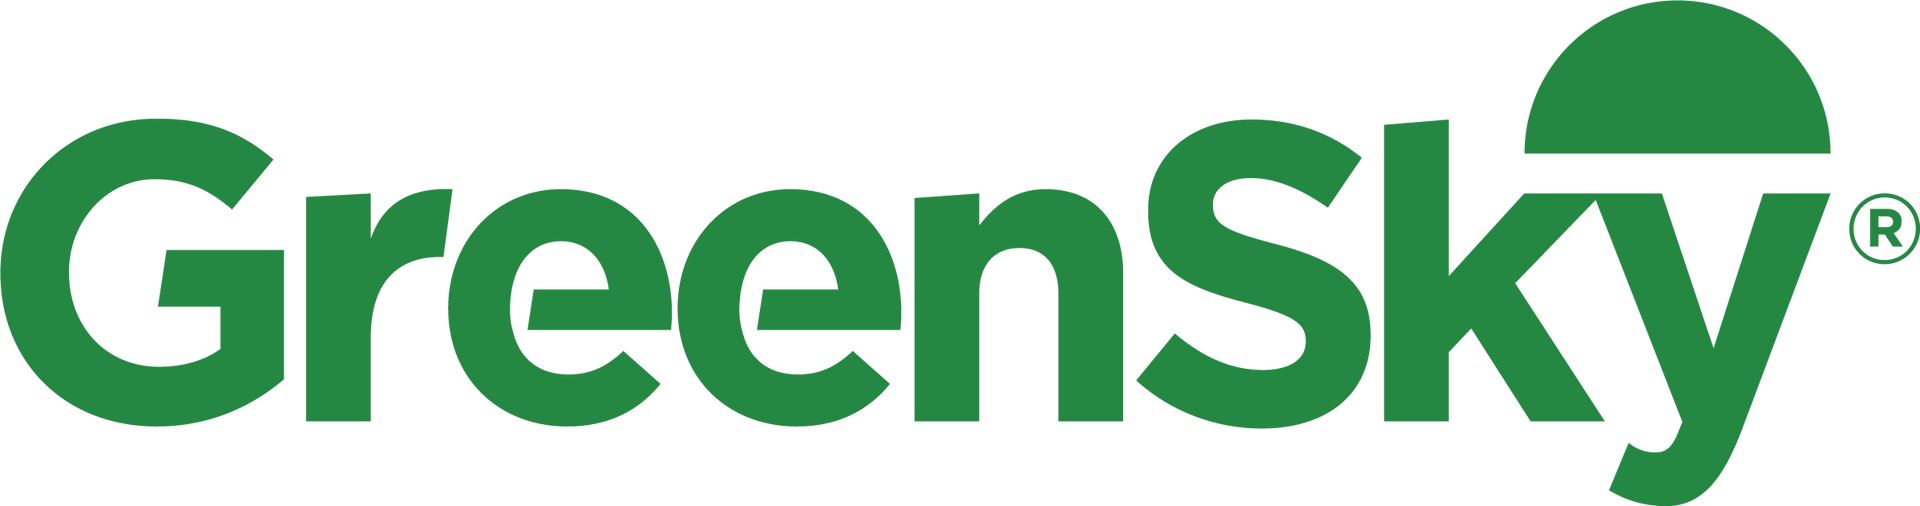 GreenSky financing logo